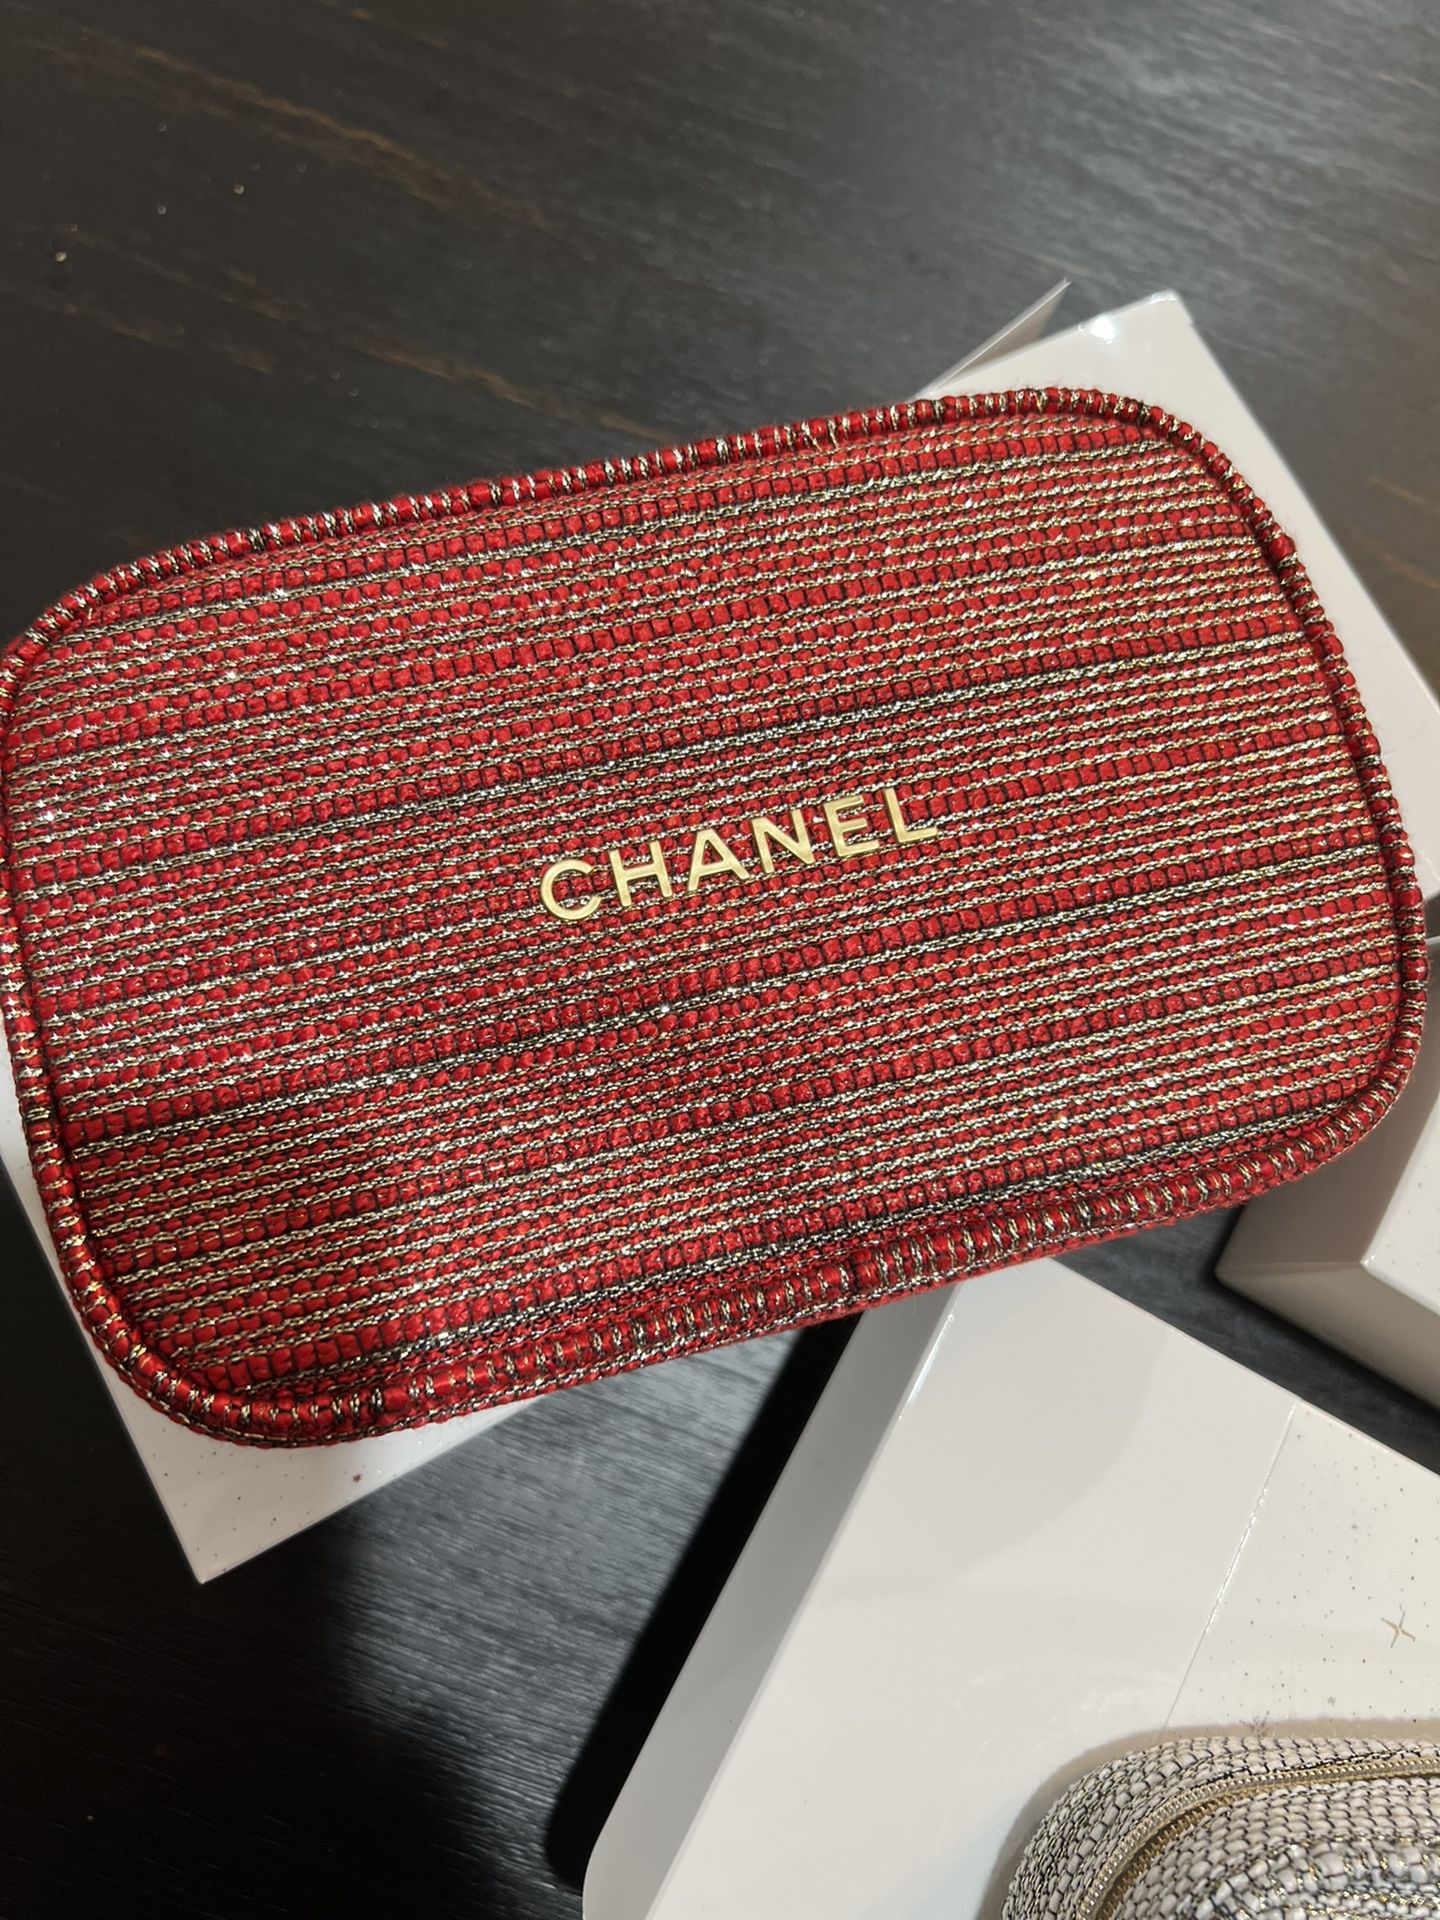 Chanel Mesh Makeup Bag by Dana Boulos